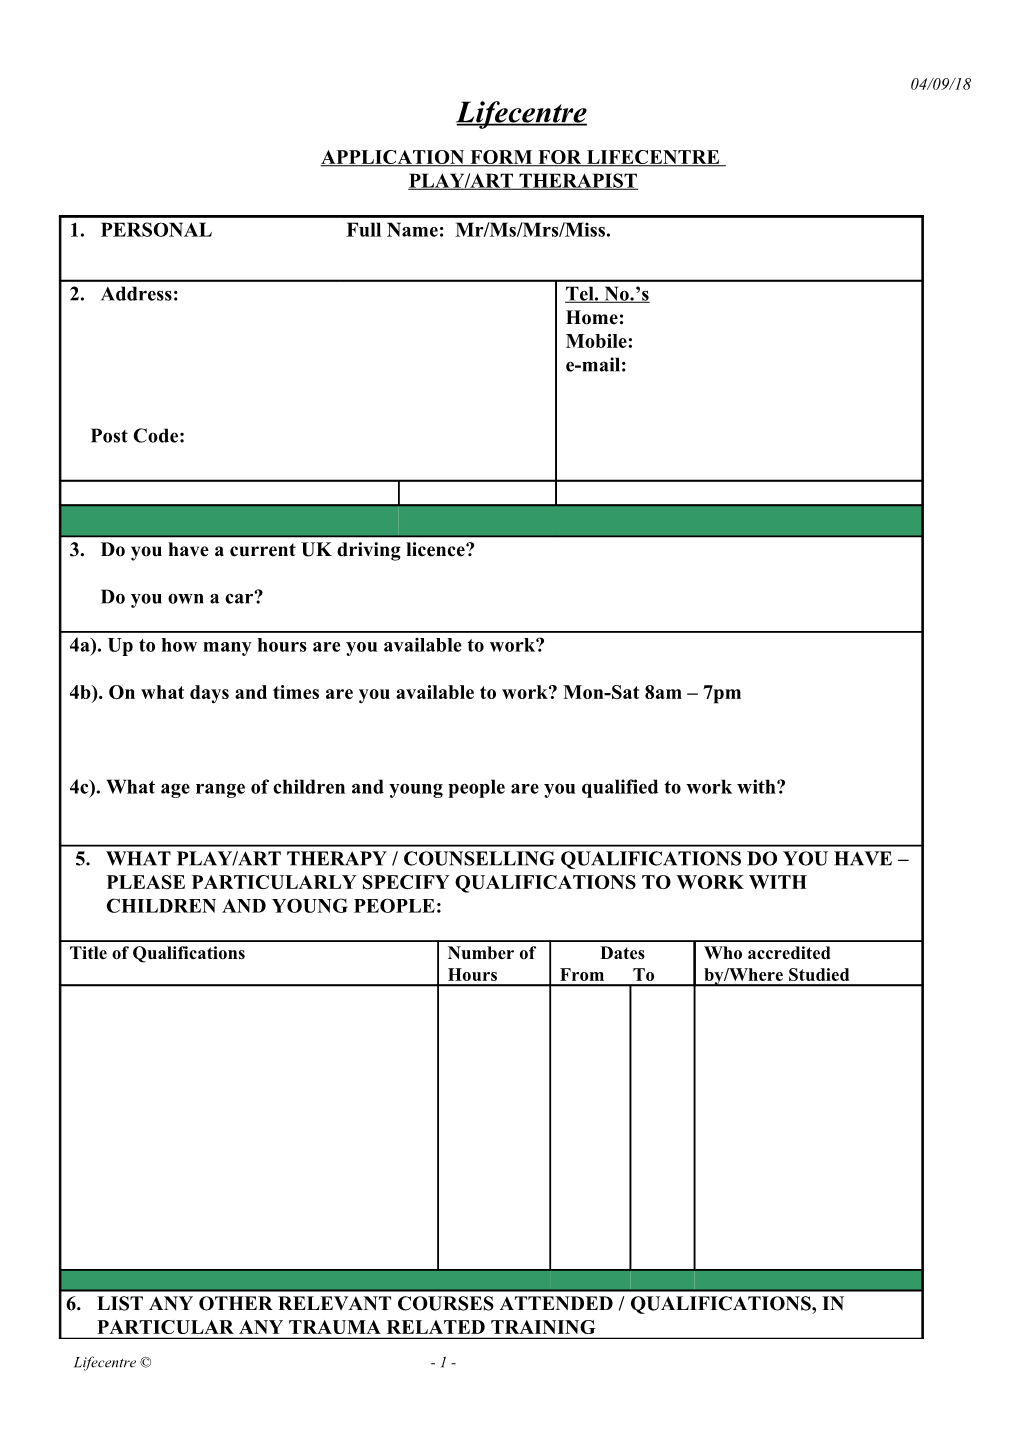 Application Form for Lifecentre